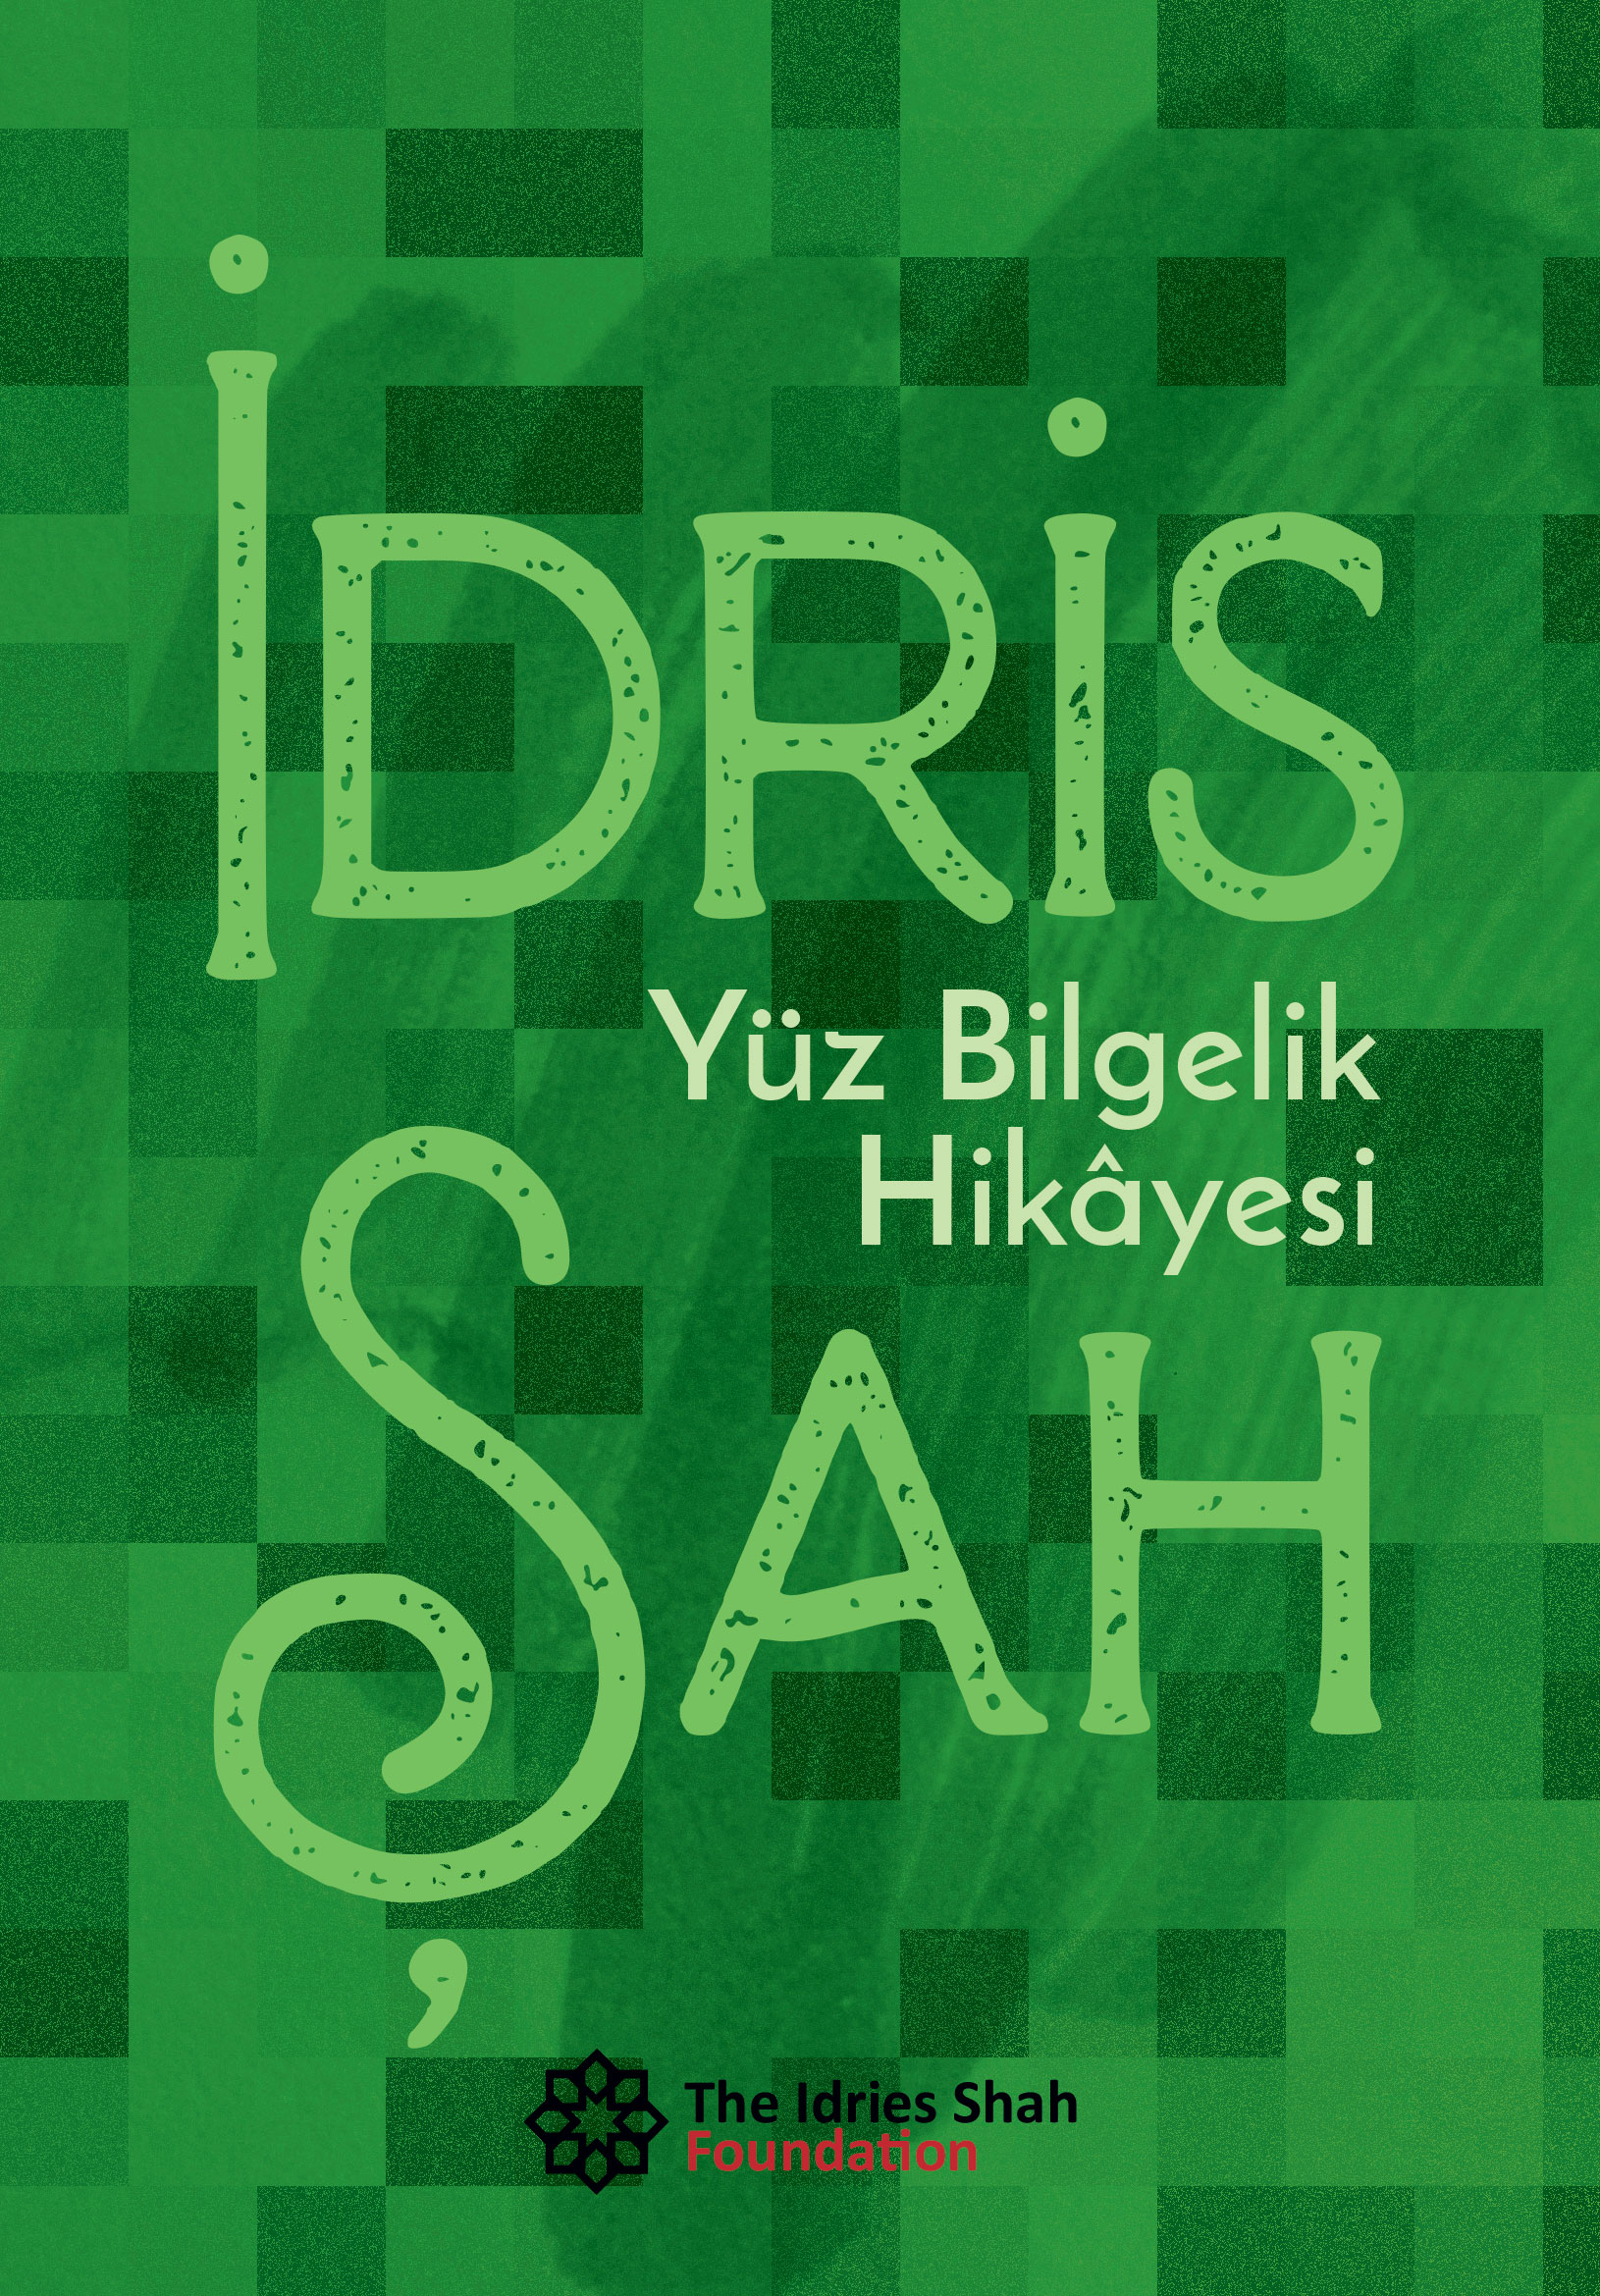 YÜZ BİLGELİK HİKÂYESİ by Idries Shah